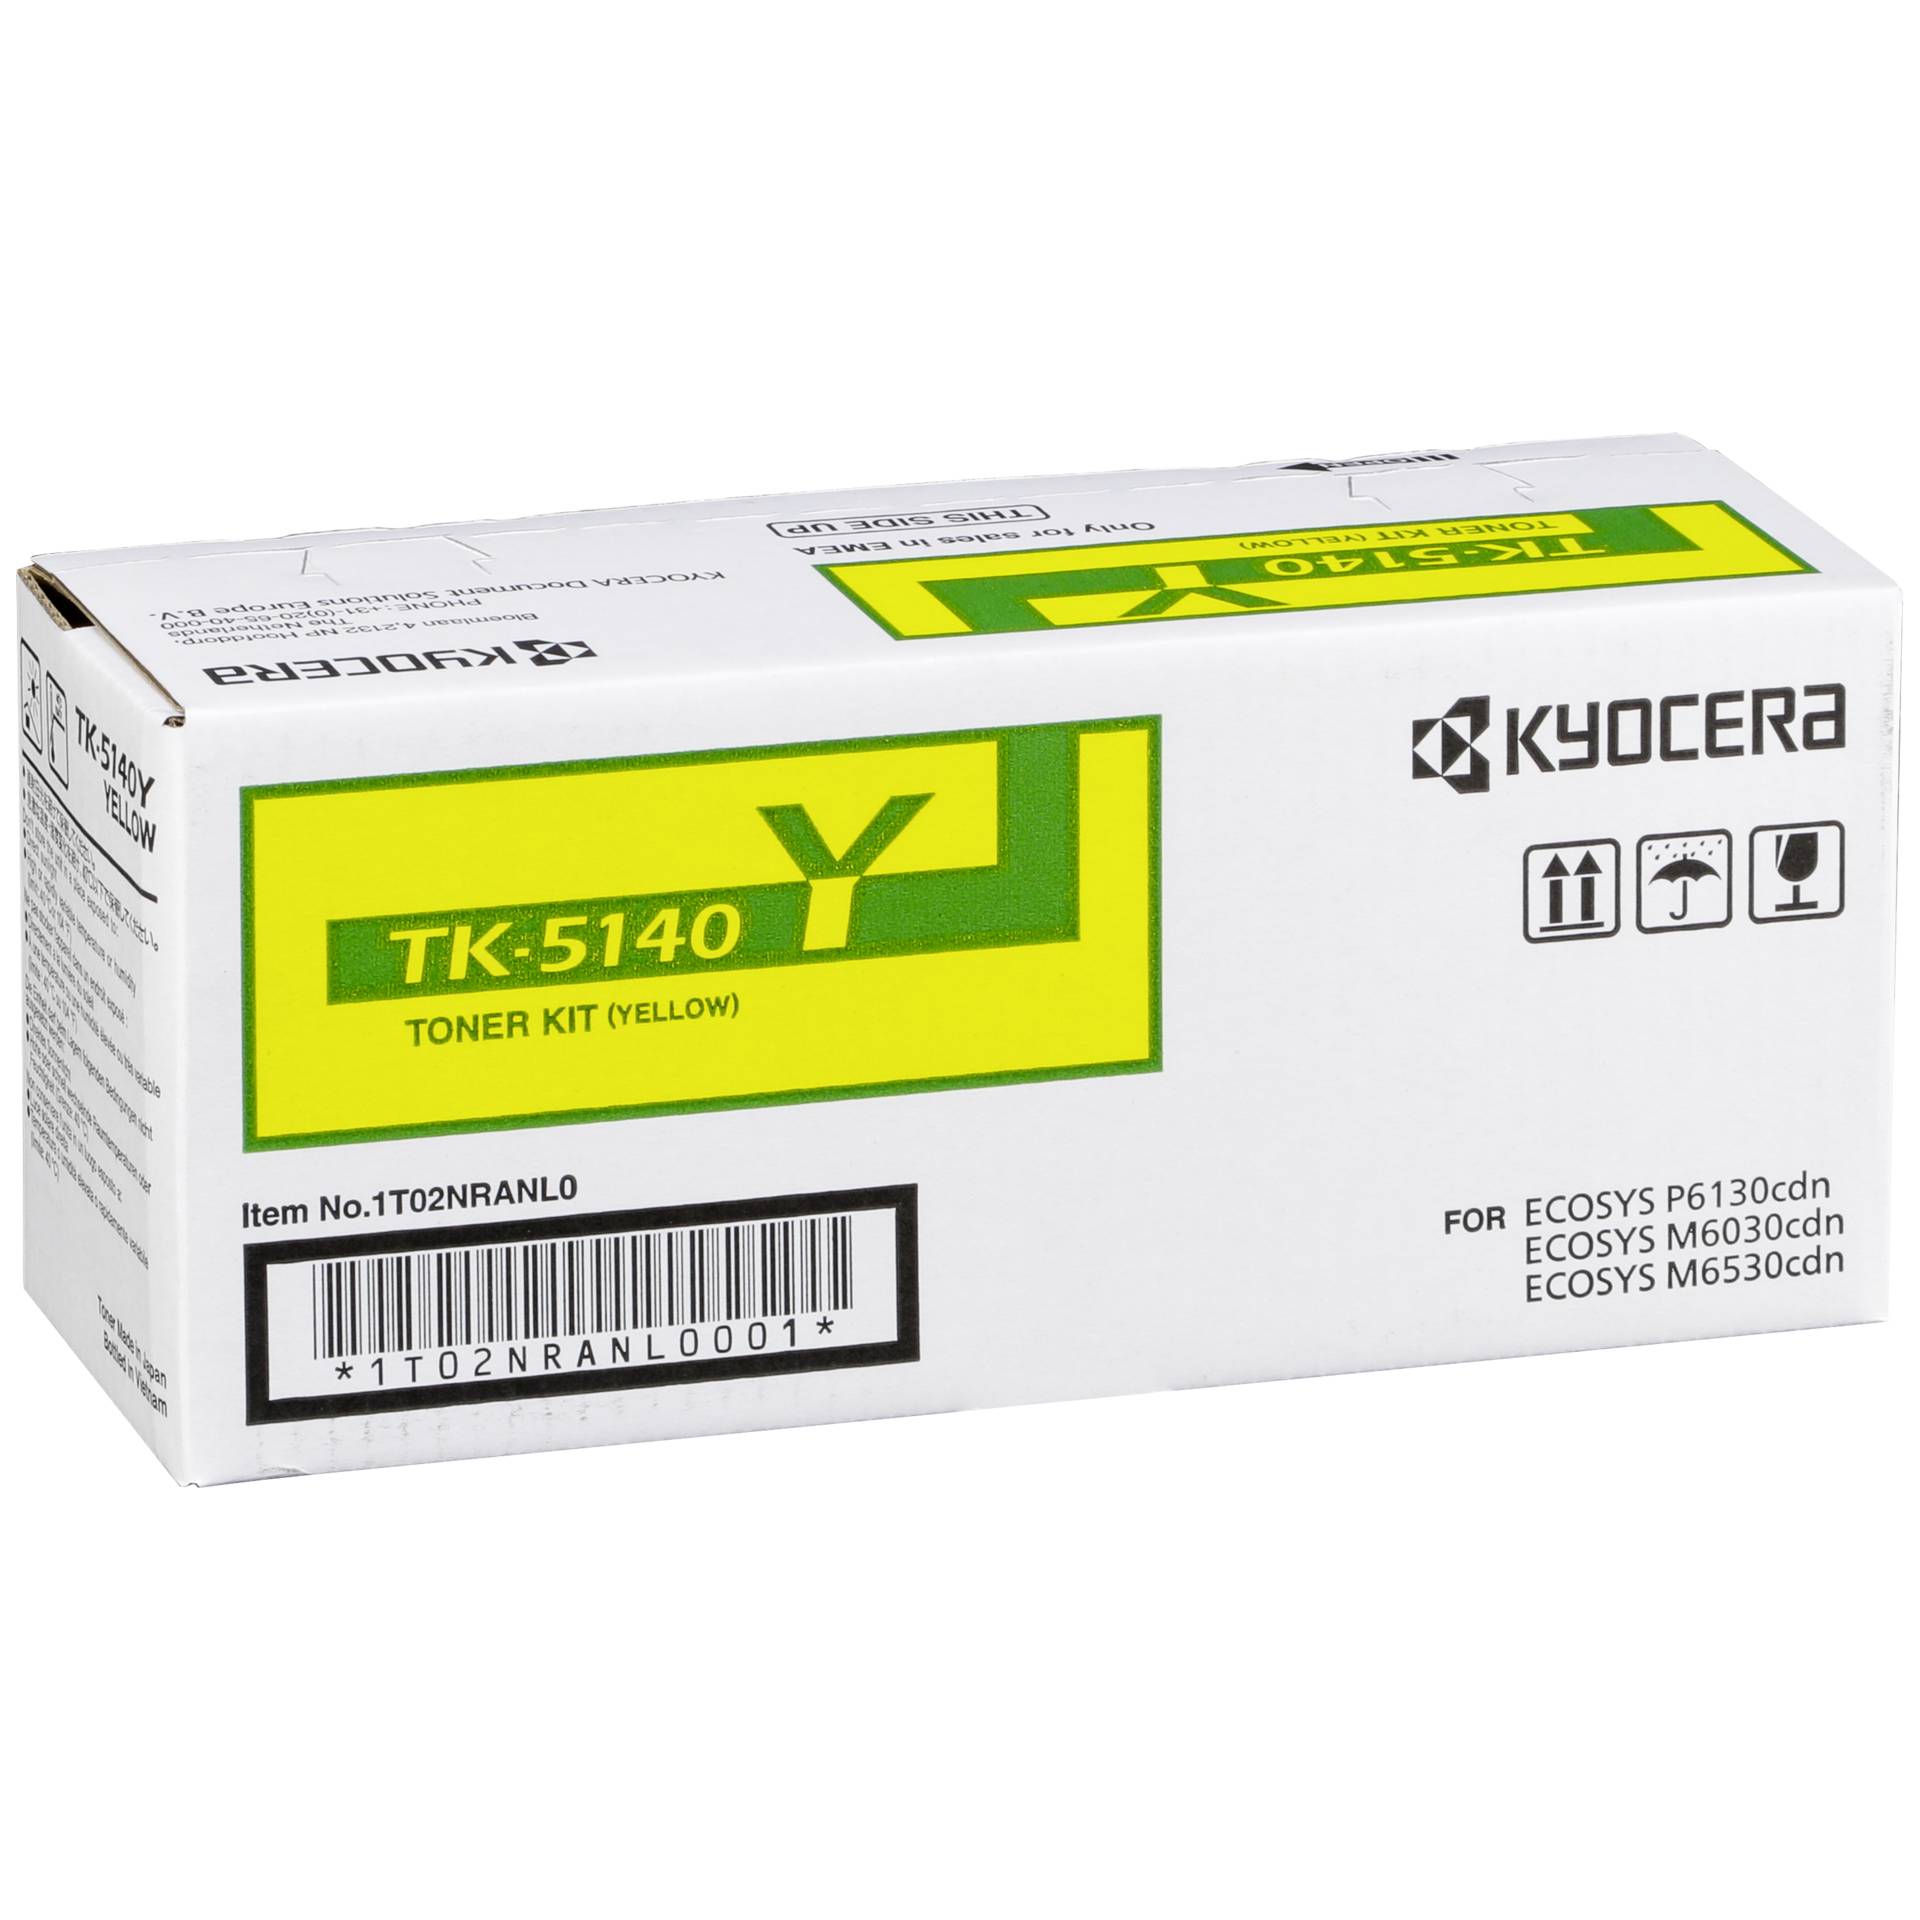 Kyocera cartuccia TK-5140 giallo